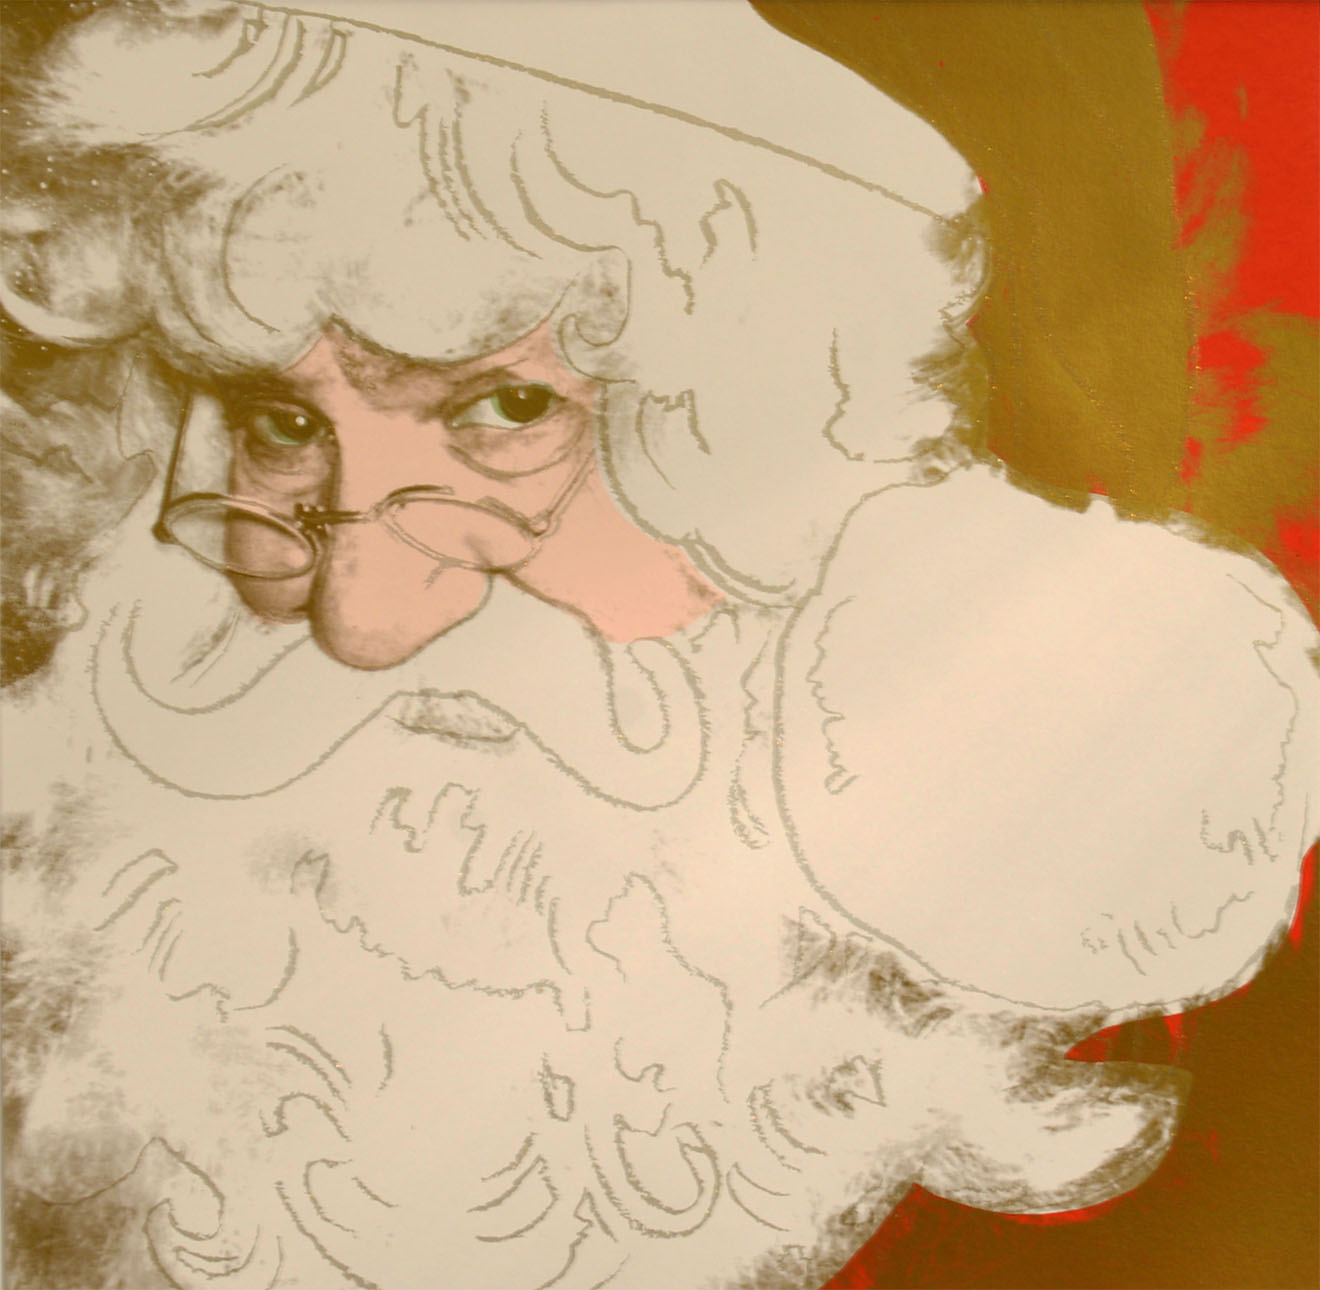 ABOUT EDWARD KURSTAK Santa Claus from Myths Portfolio by ANDY Warhol